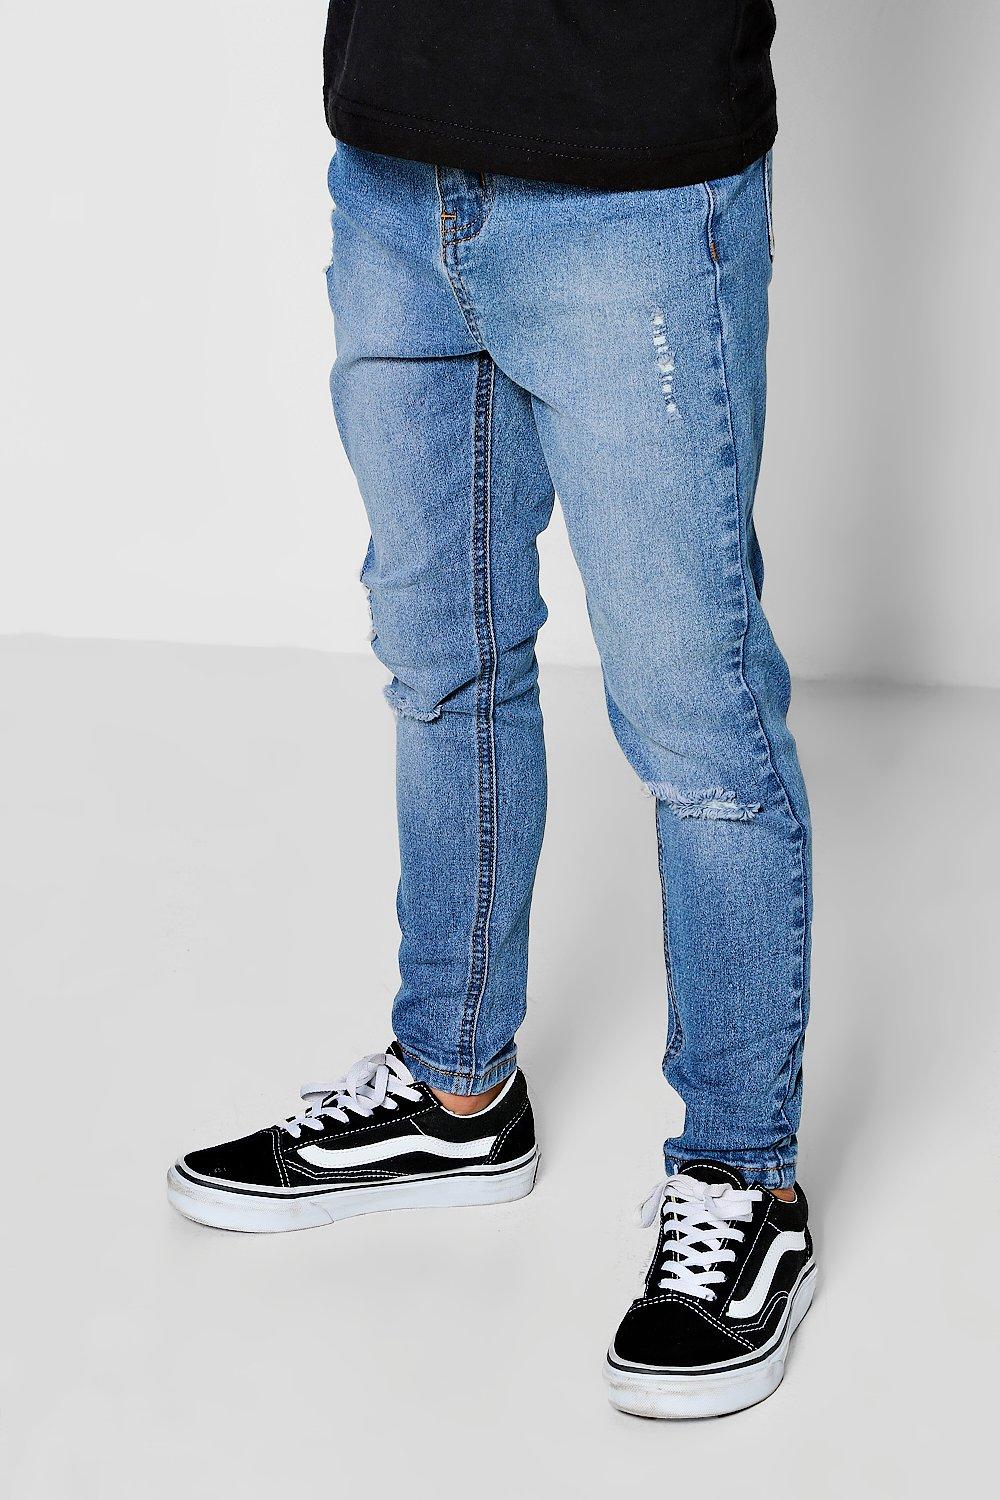 jeans boy style